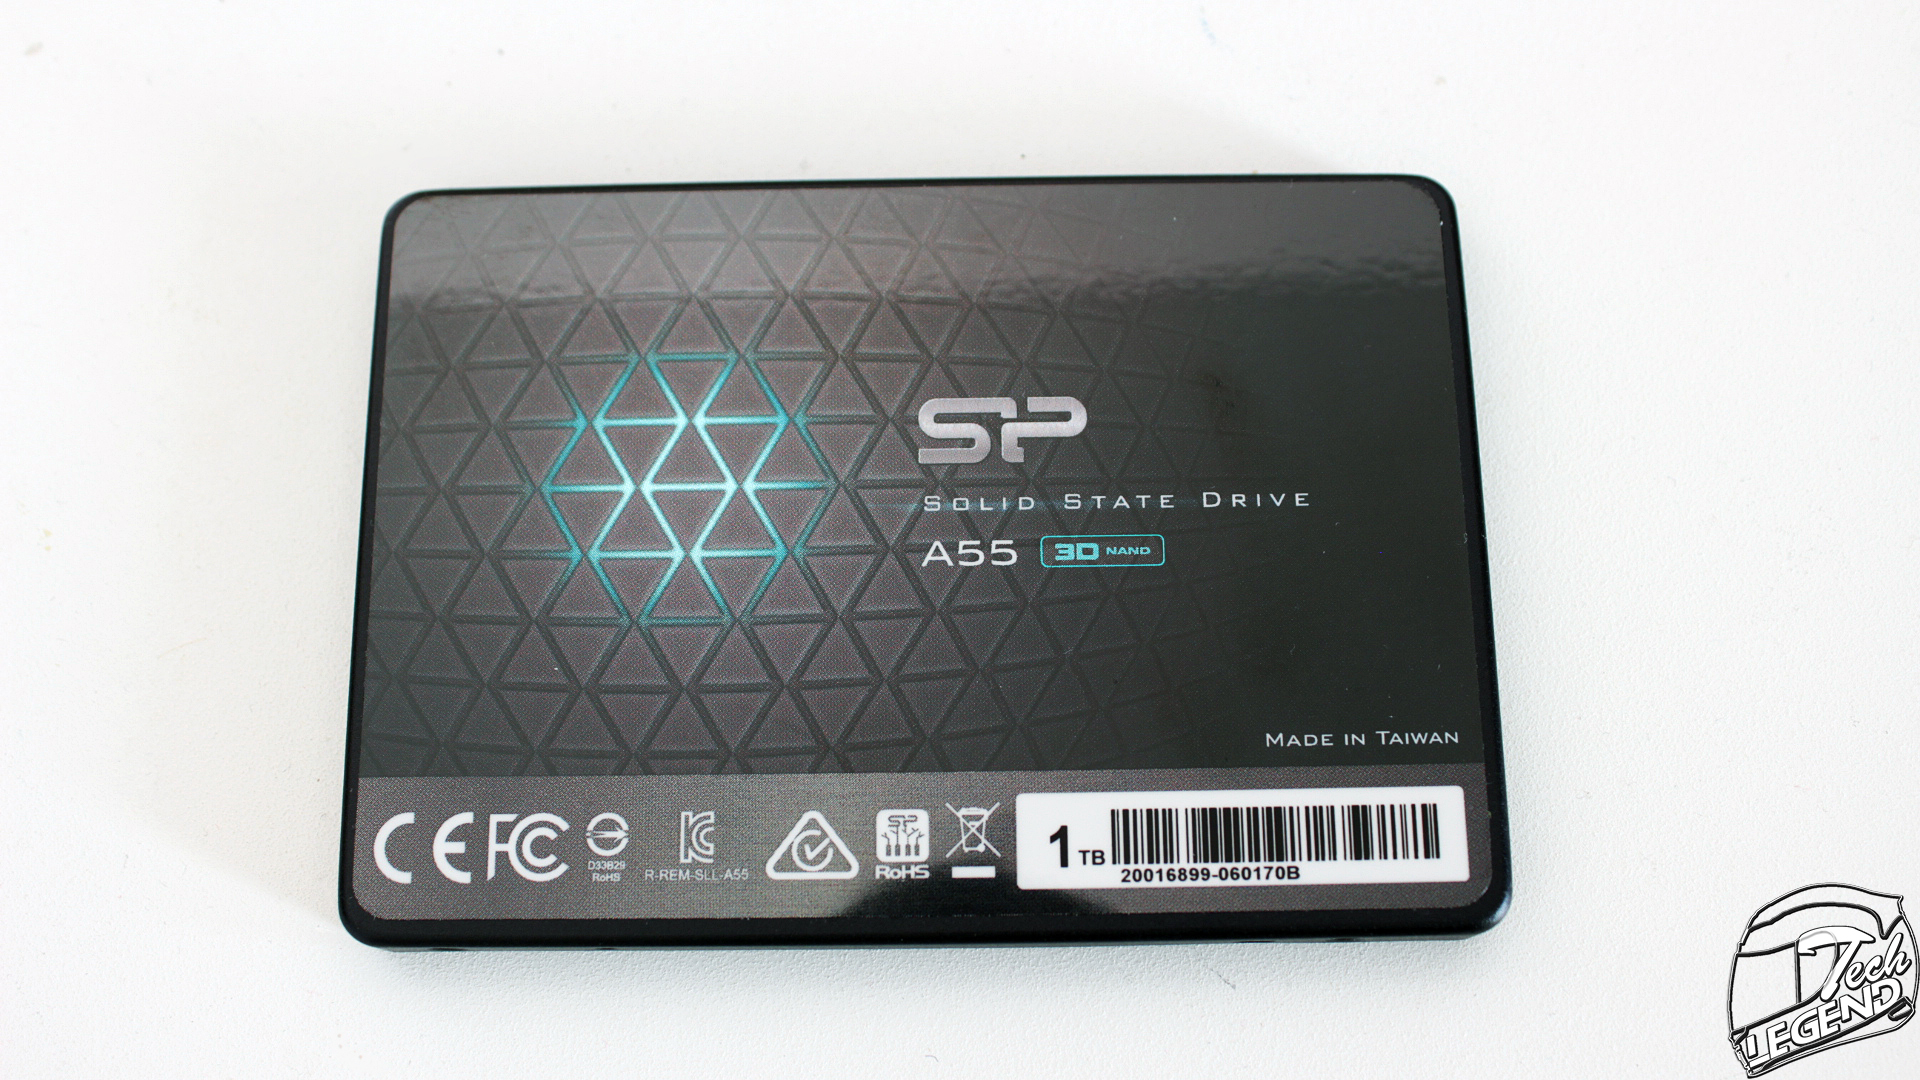 Silicon Power SSD 1tb. Silicon Power SSD a55 1tb. Silicon Power Slim s55 480gb контроллер. 1. Silicon Power ud90 1tb - 1 шт - $36.00. Silicon power a55